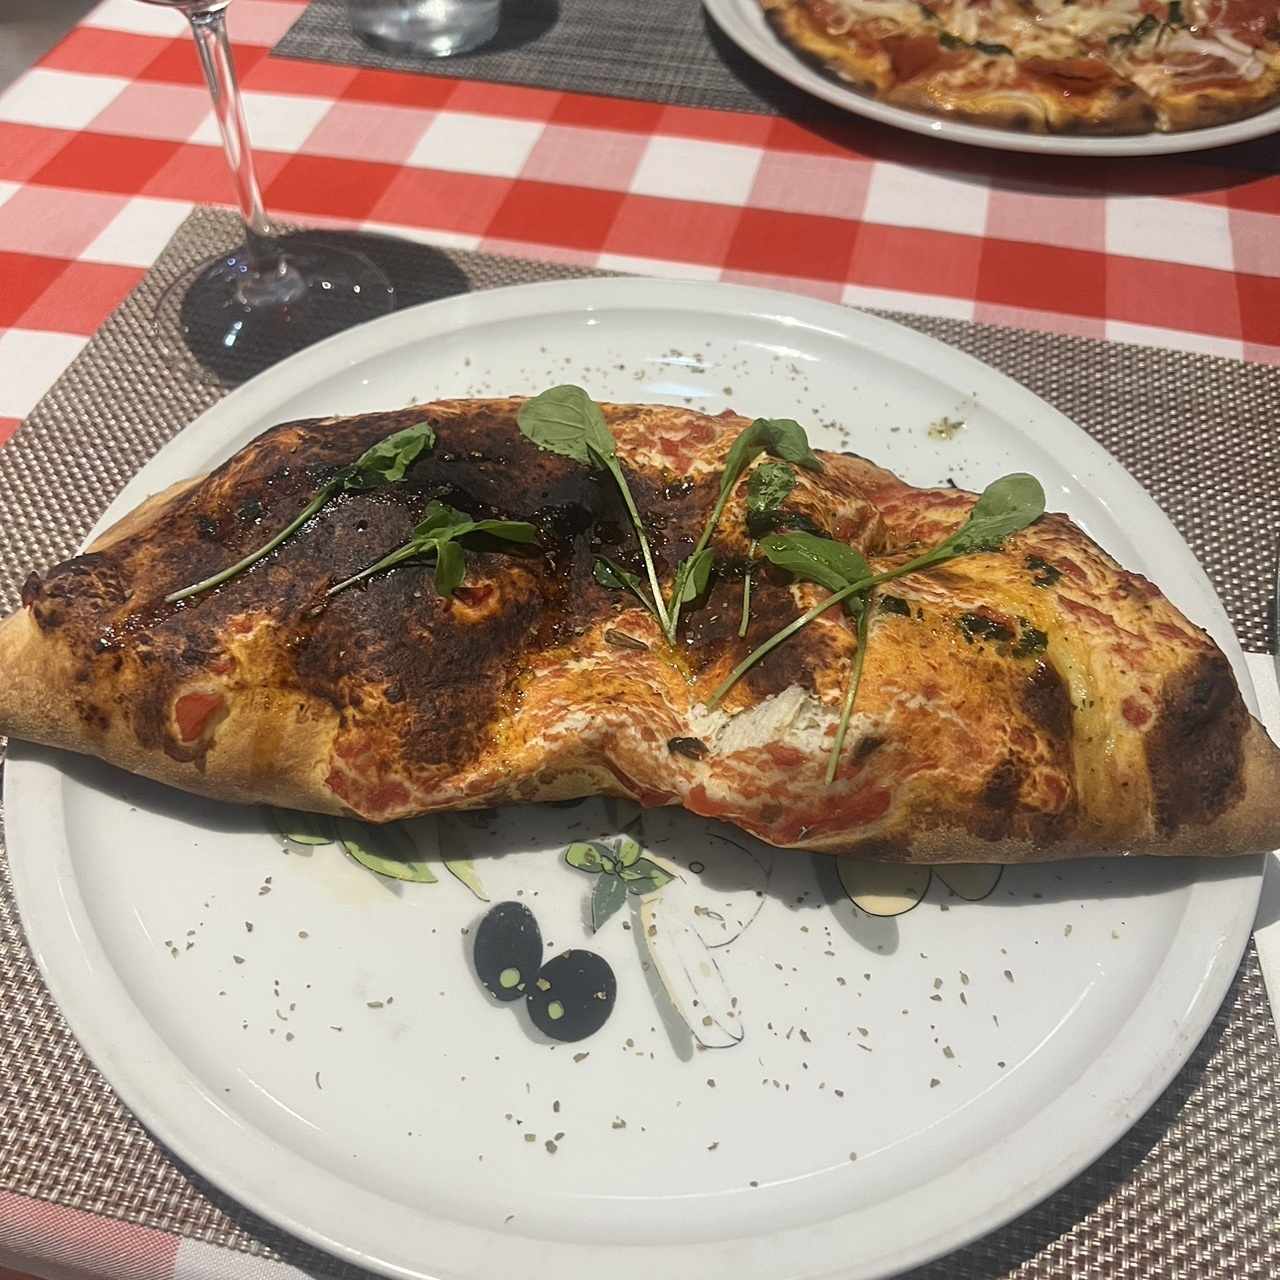 Pizzas Gourmet - Calzone